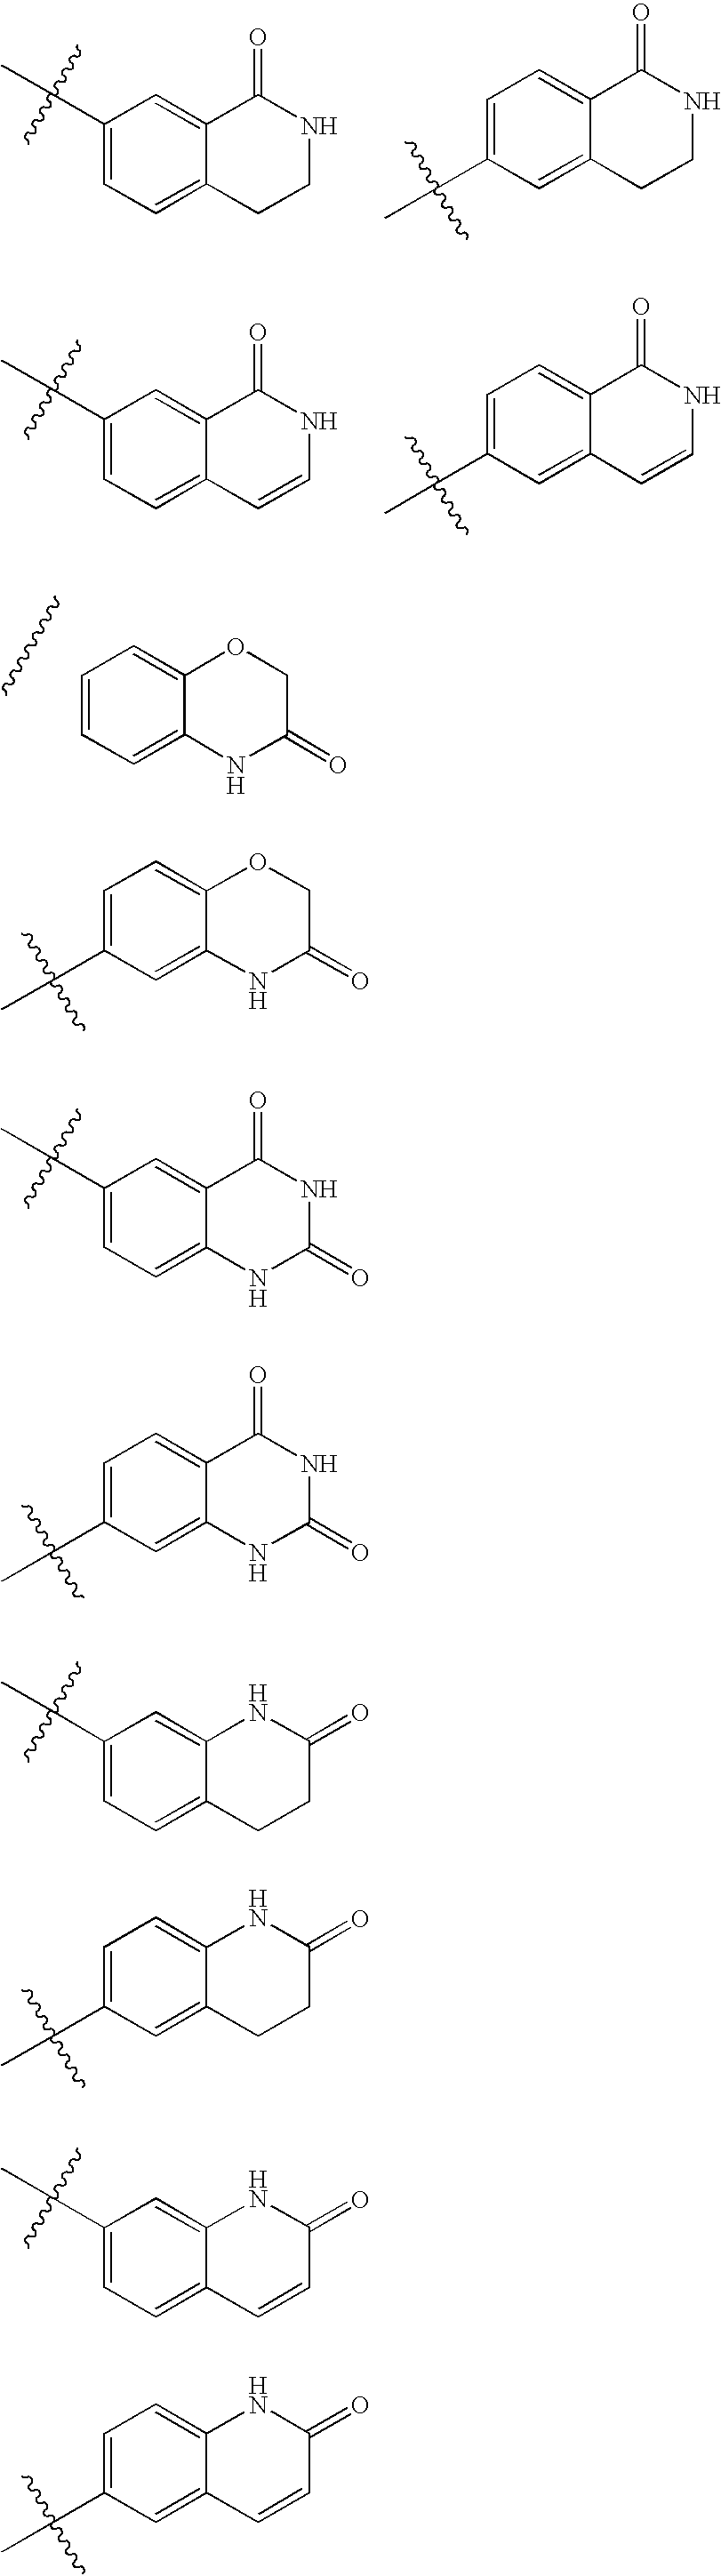 Dipeptide analogs as coagulation factor inhibitors